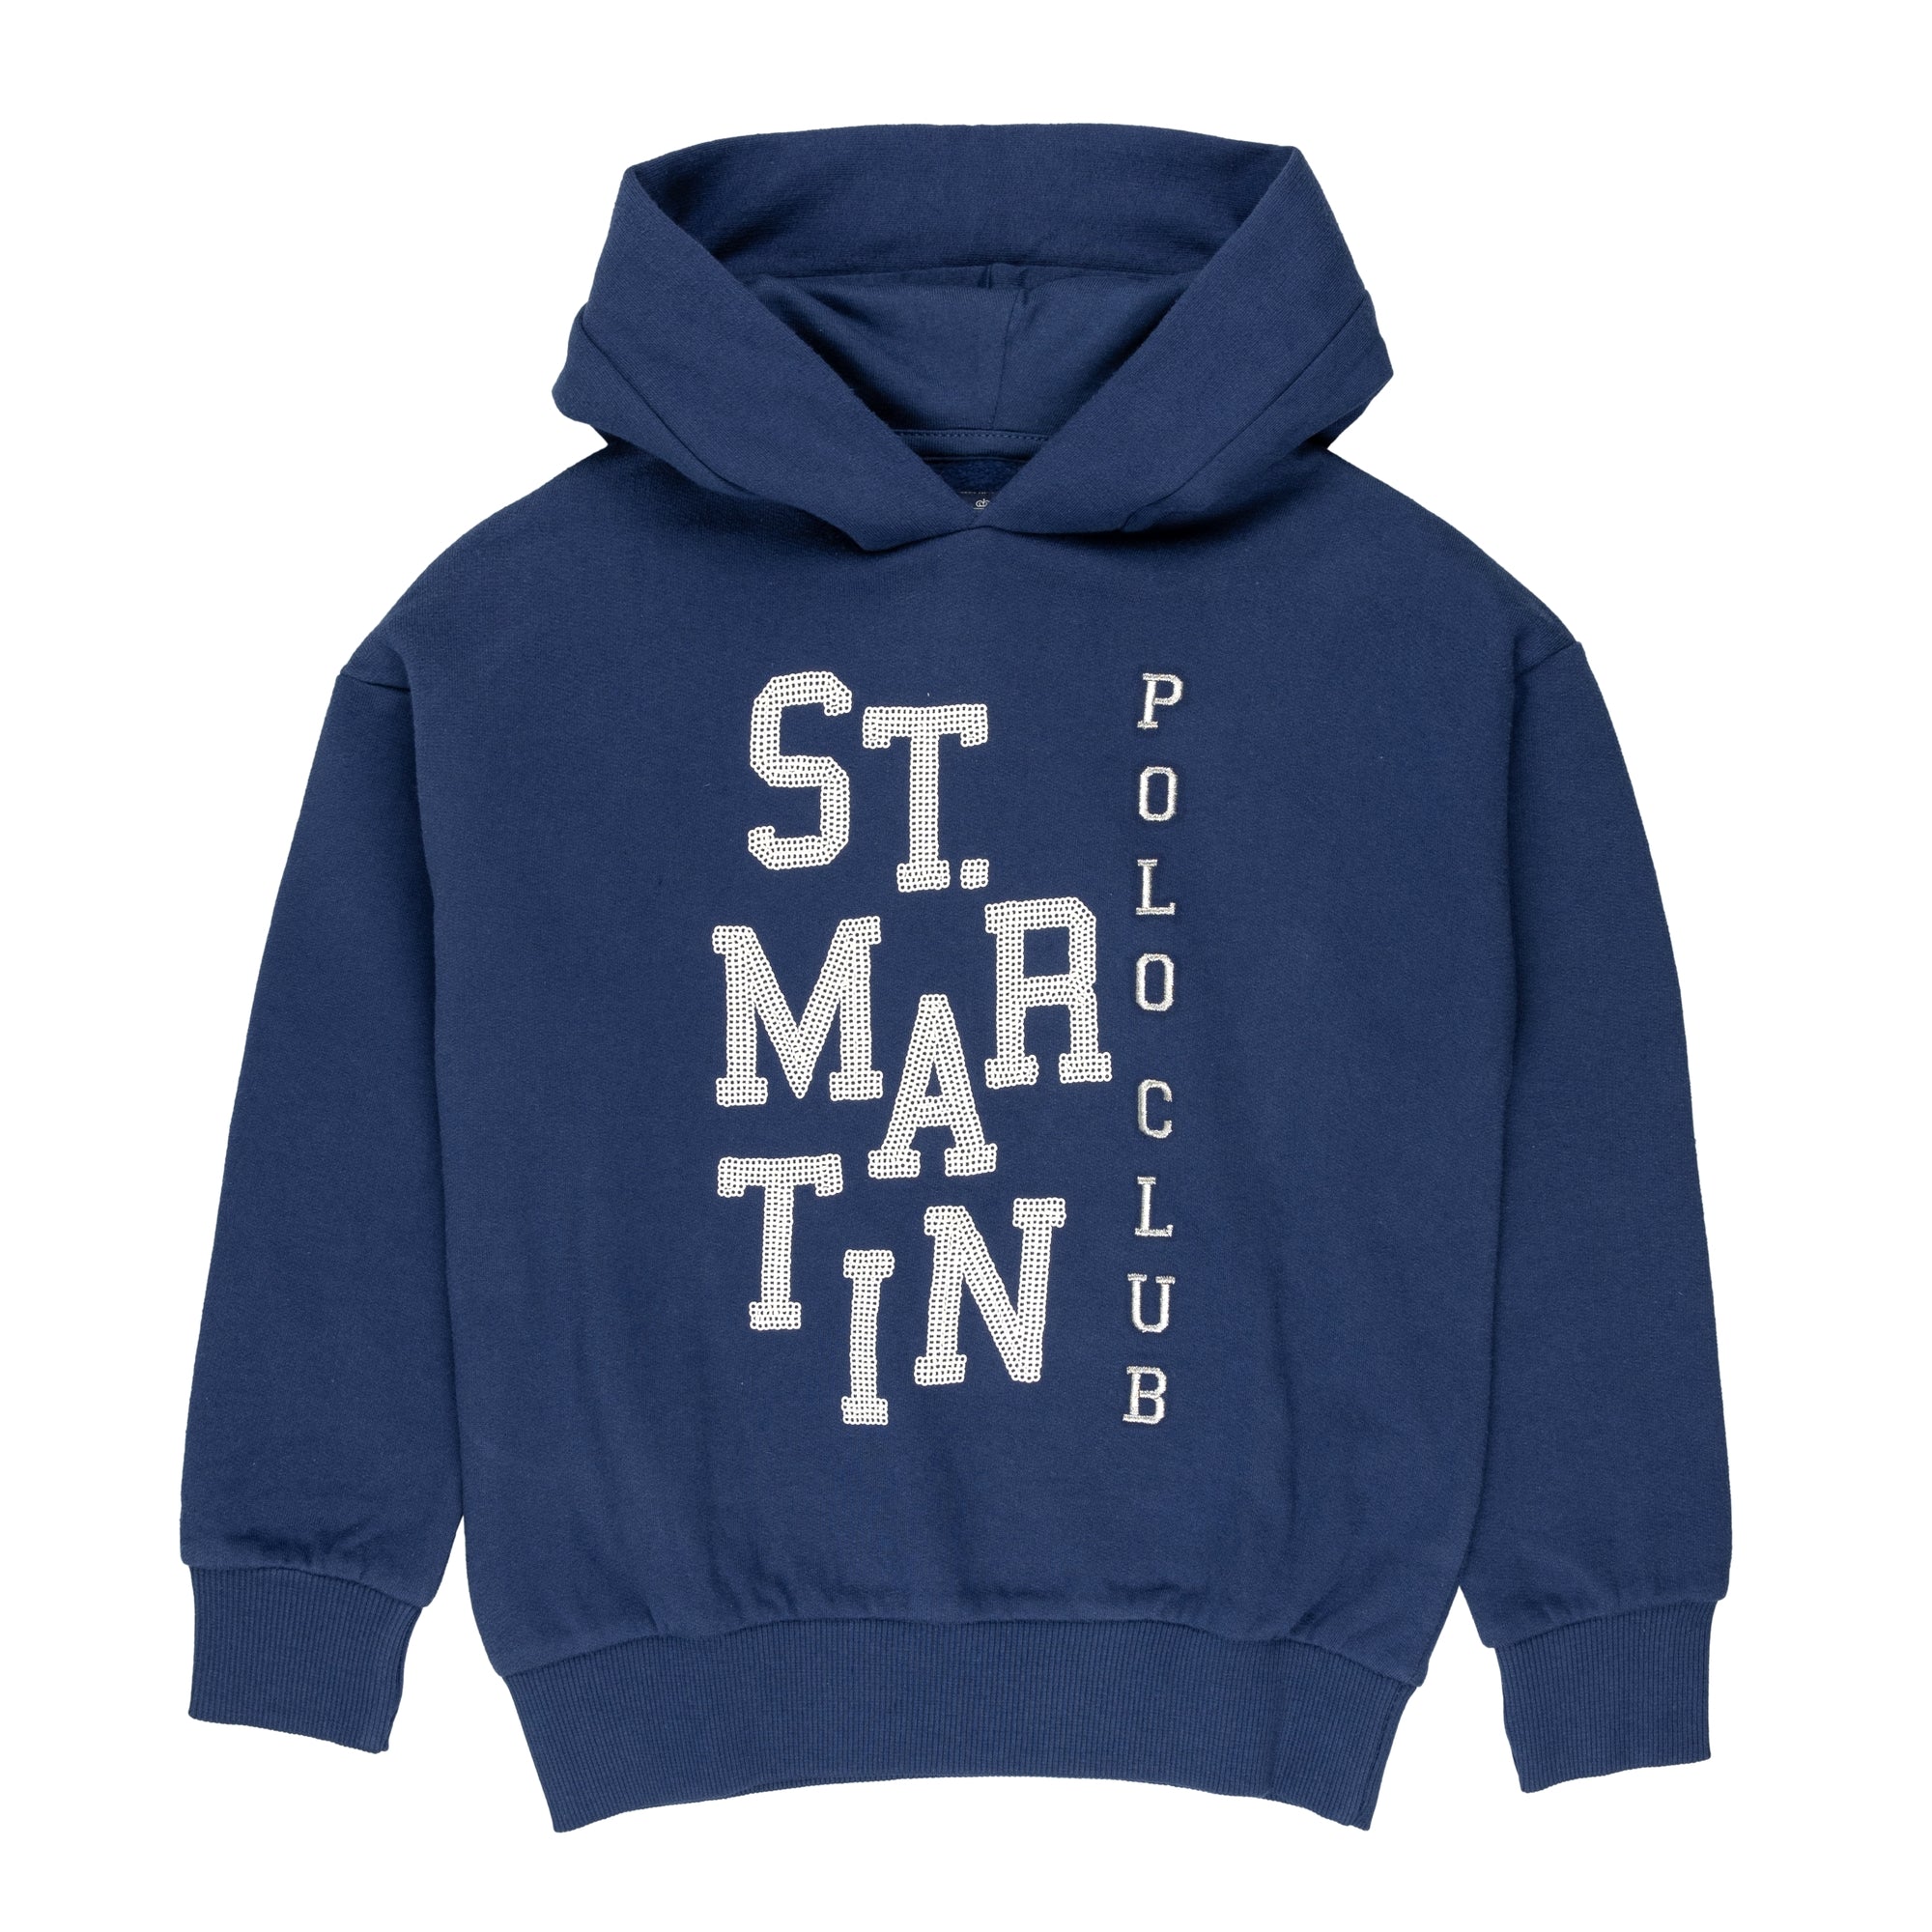 Sweatshirt with hood and maxi logo